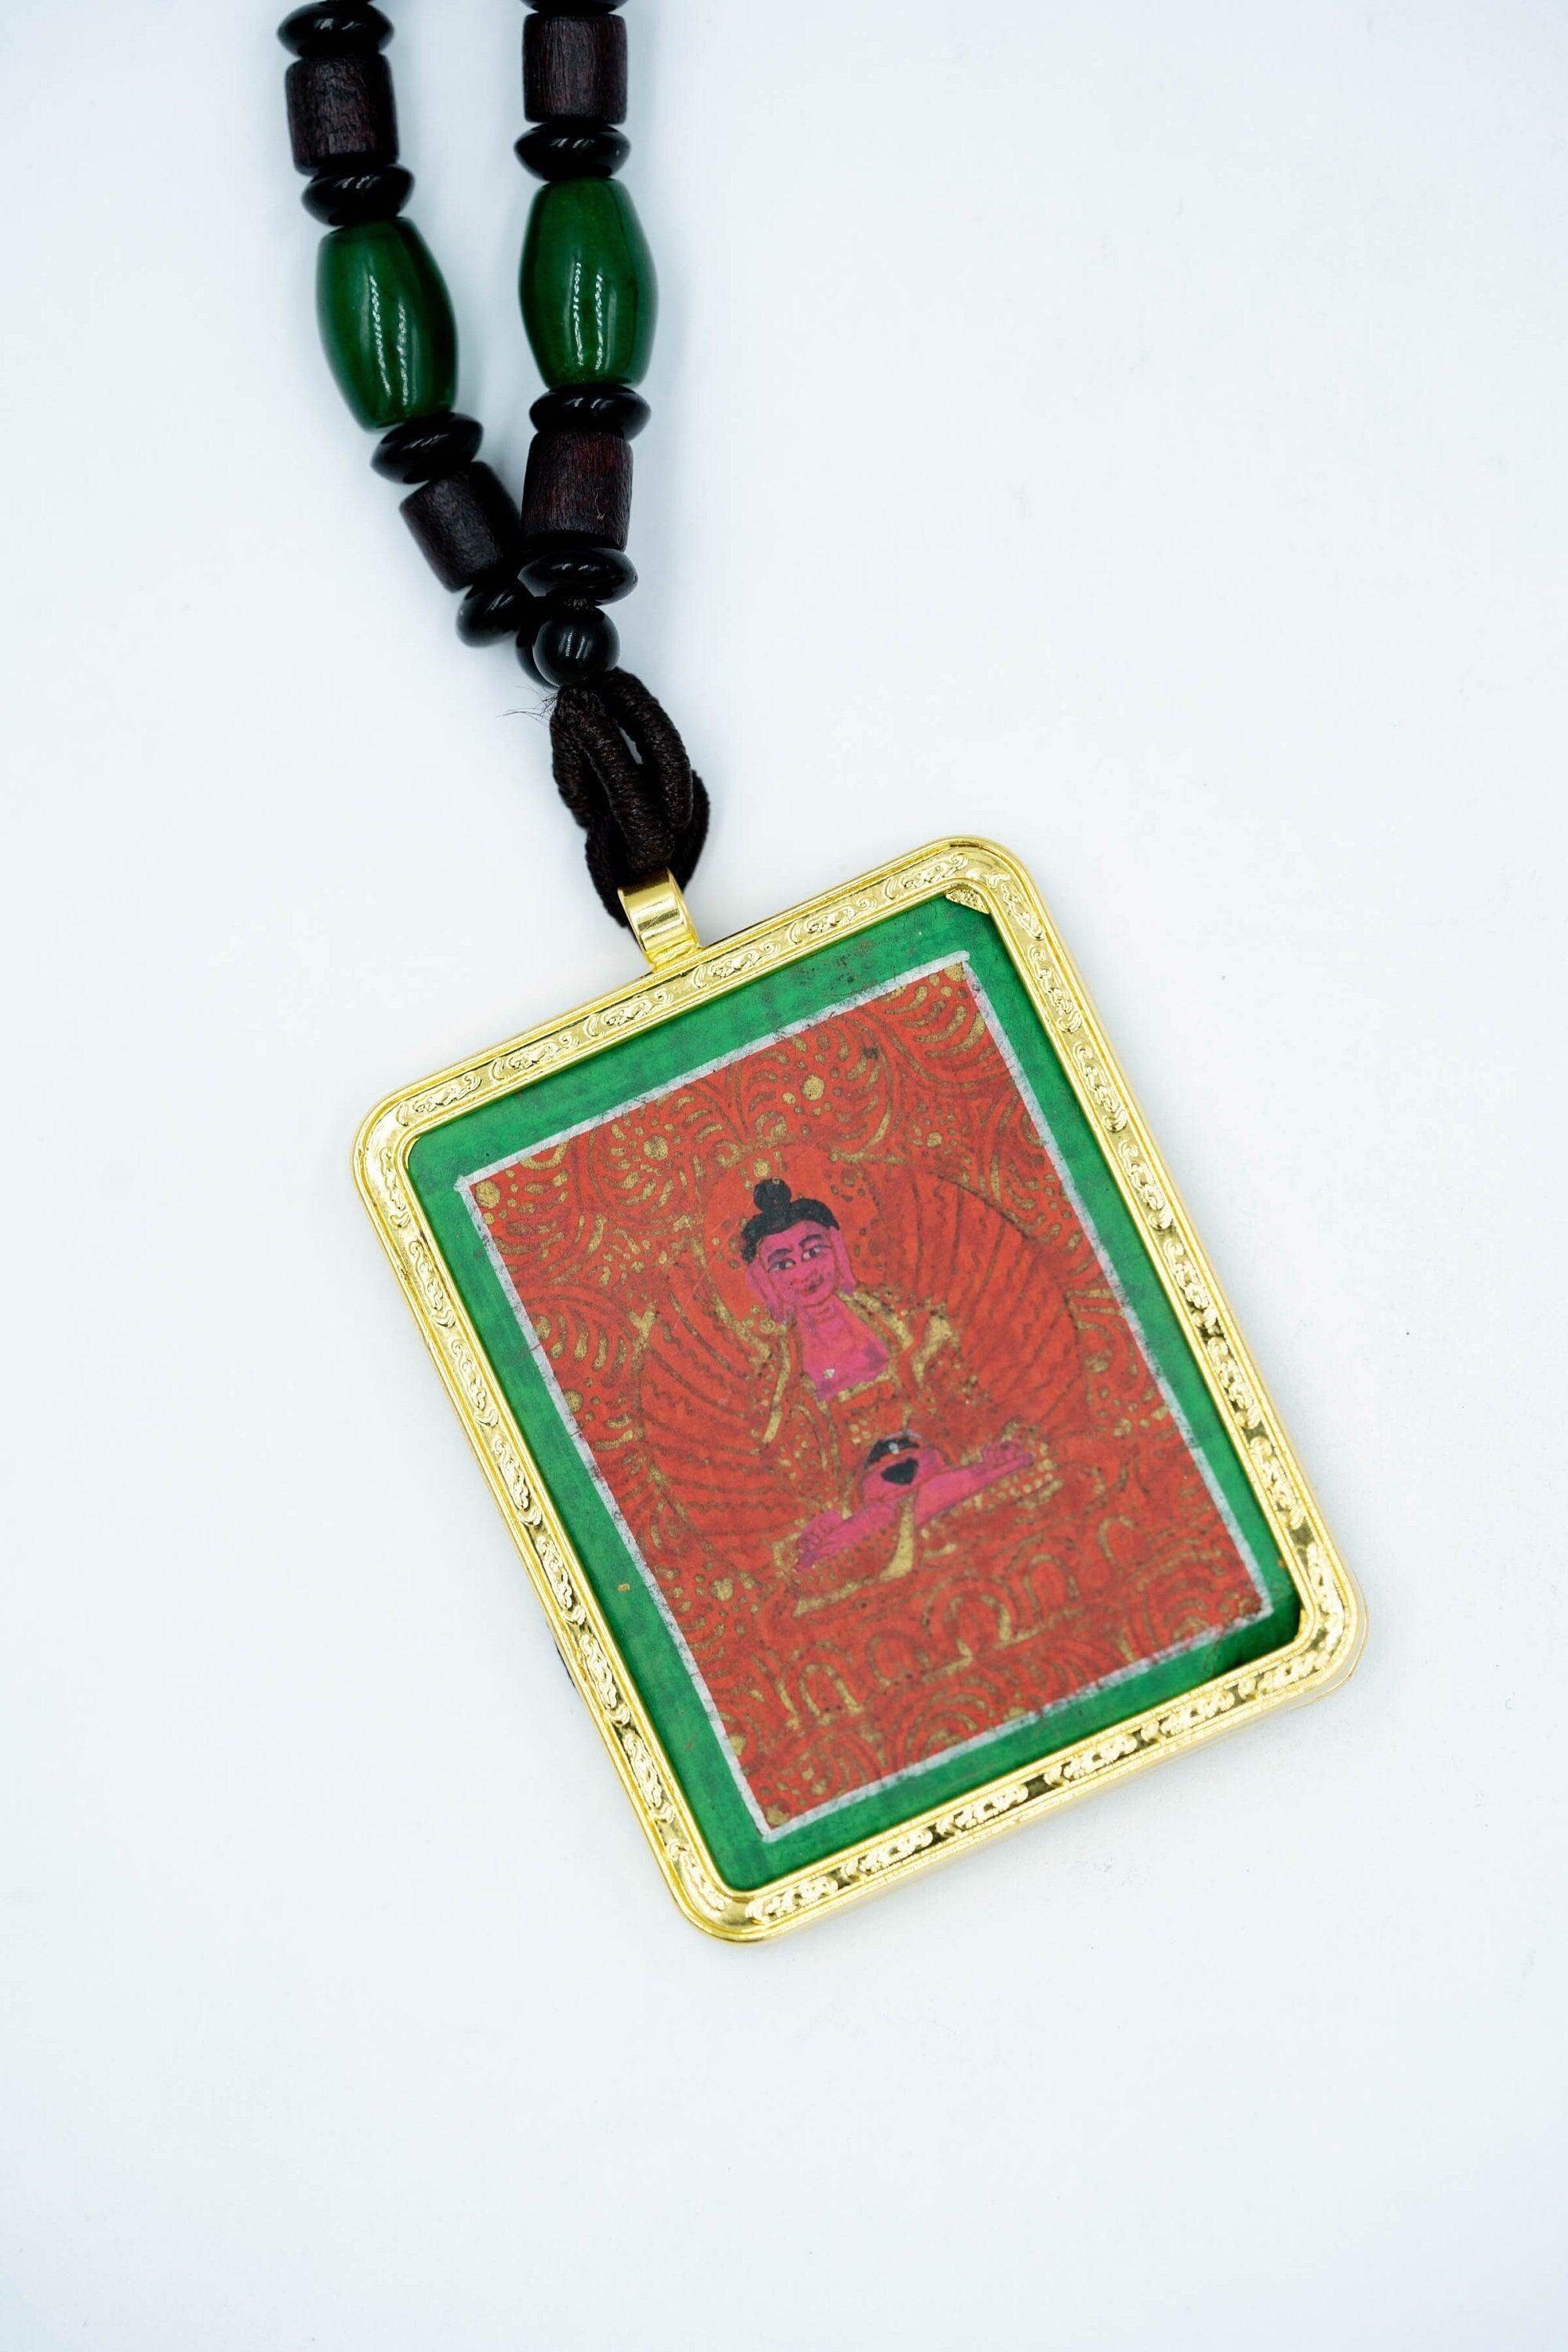 Amitabha Buddha Ghau Thangka